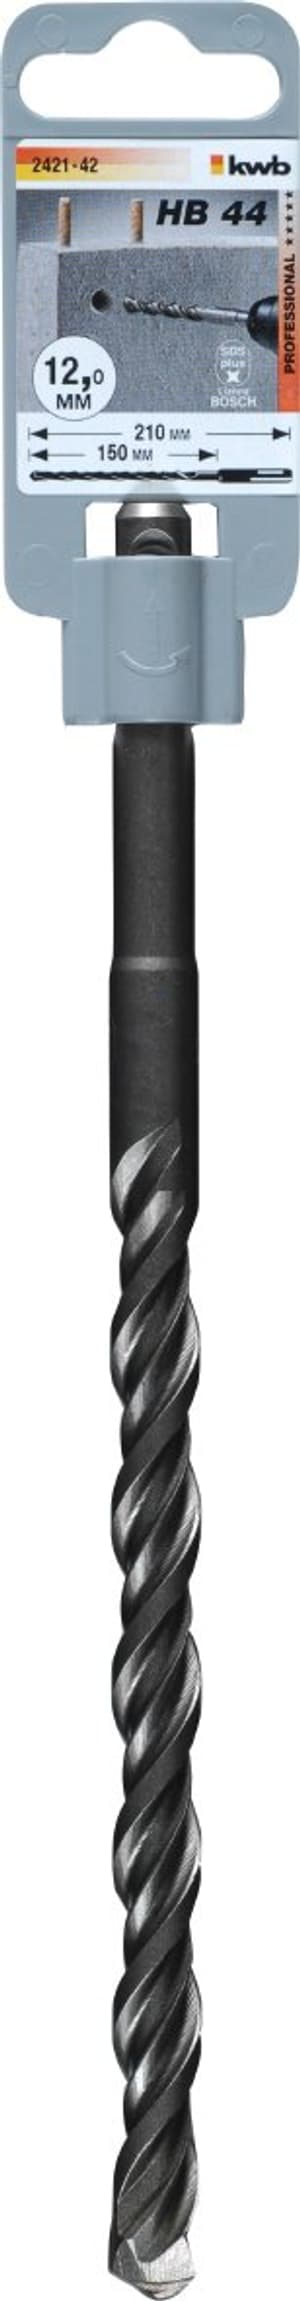 HB 44 SDS plus Punte per martello, 210/150 mm, ø 12 mm